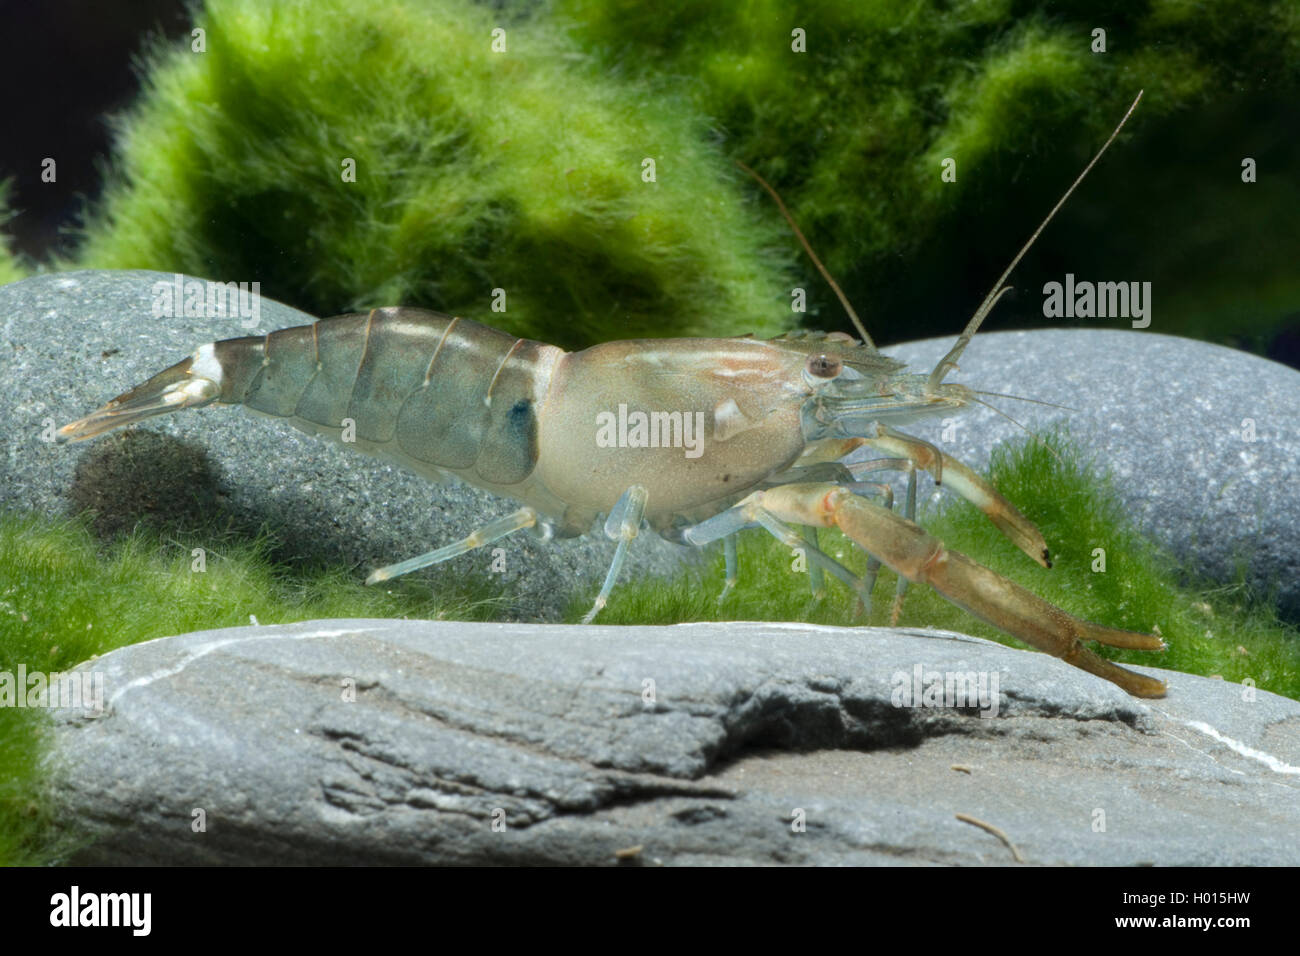 Himalayan freshwater shrimp (Macrobrachium agwi), sitting on a stone Stock Photo